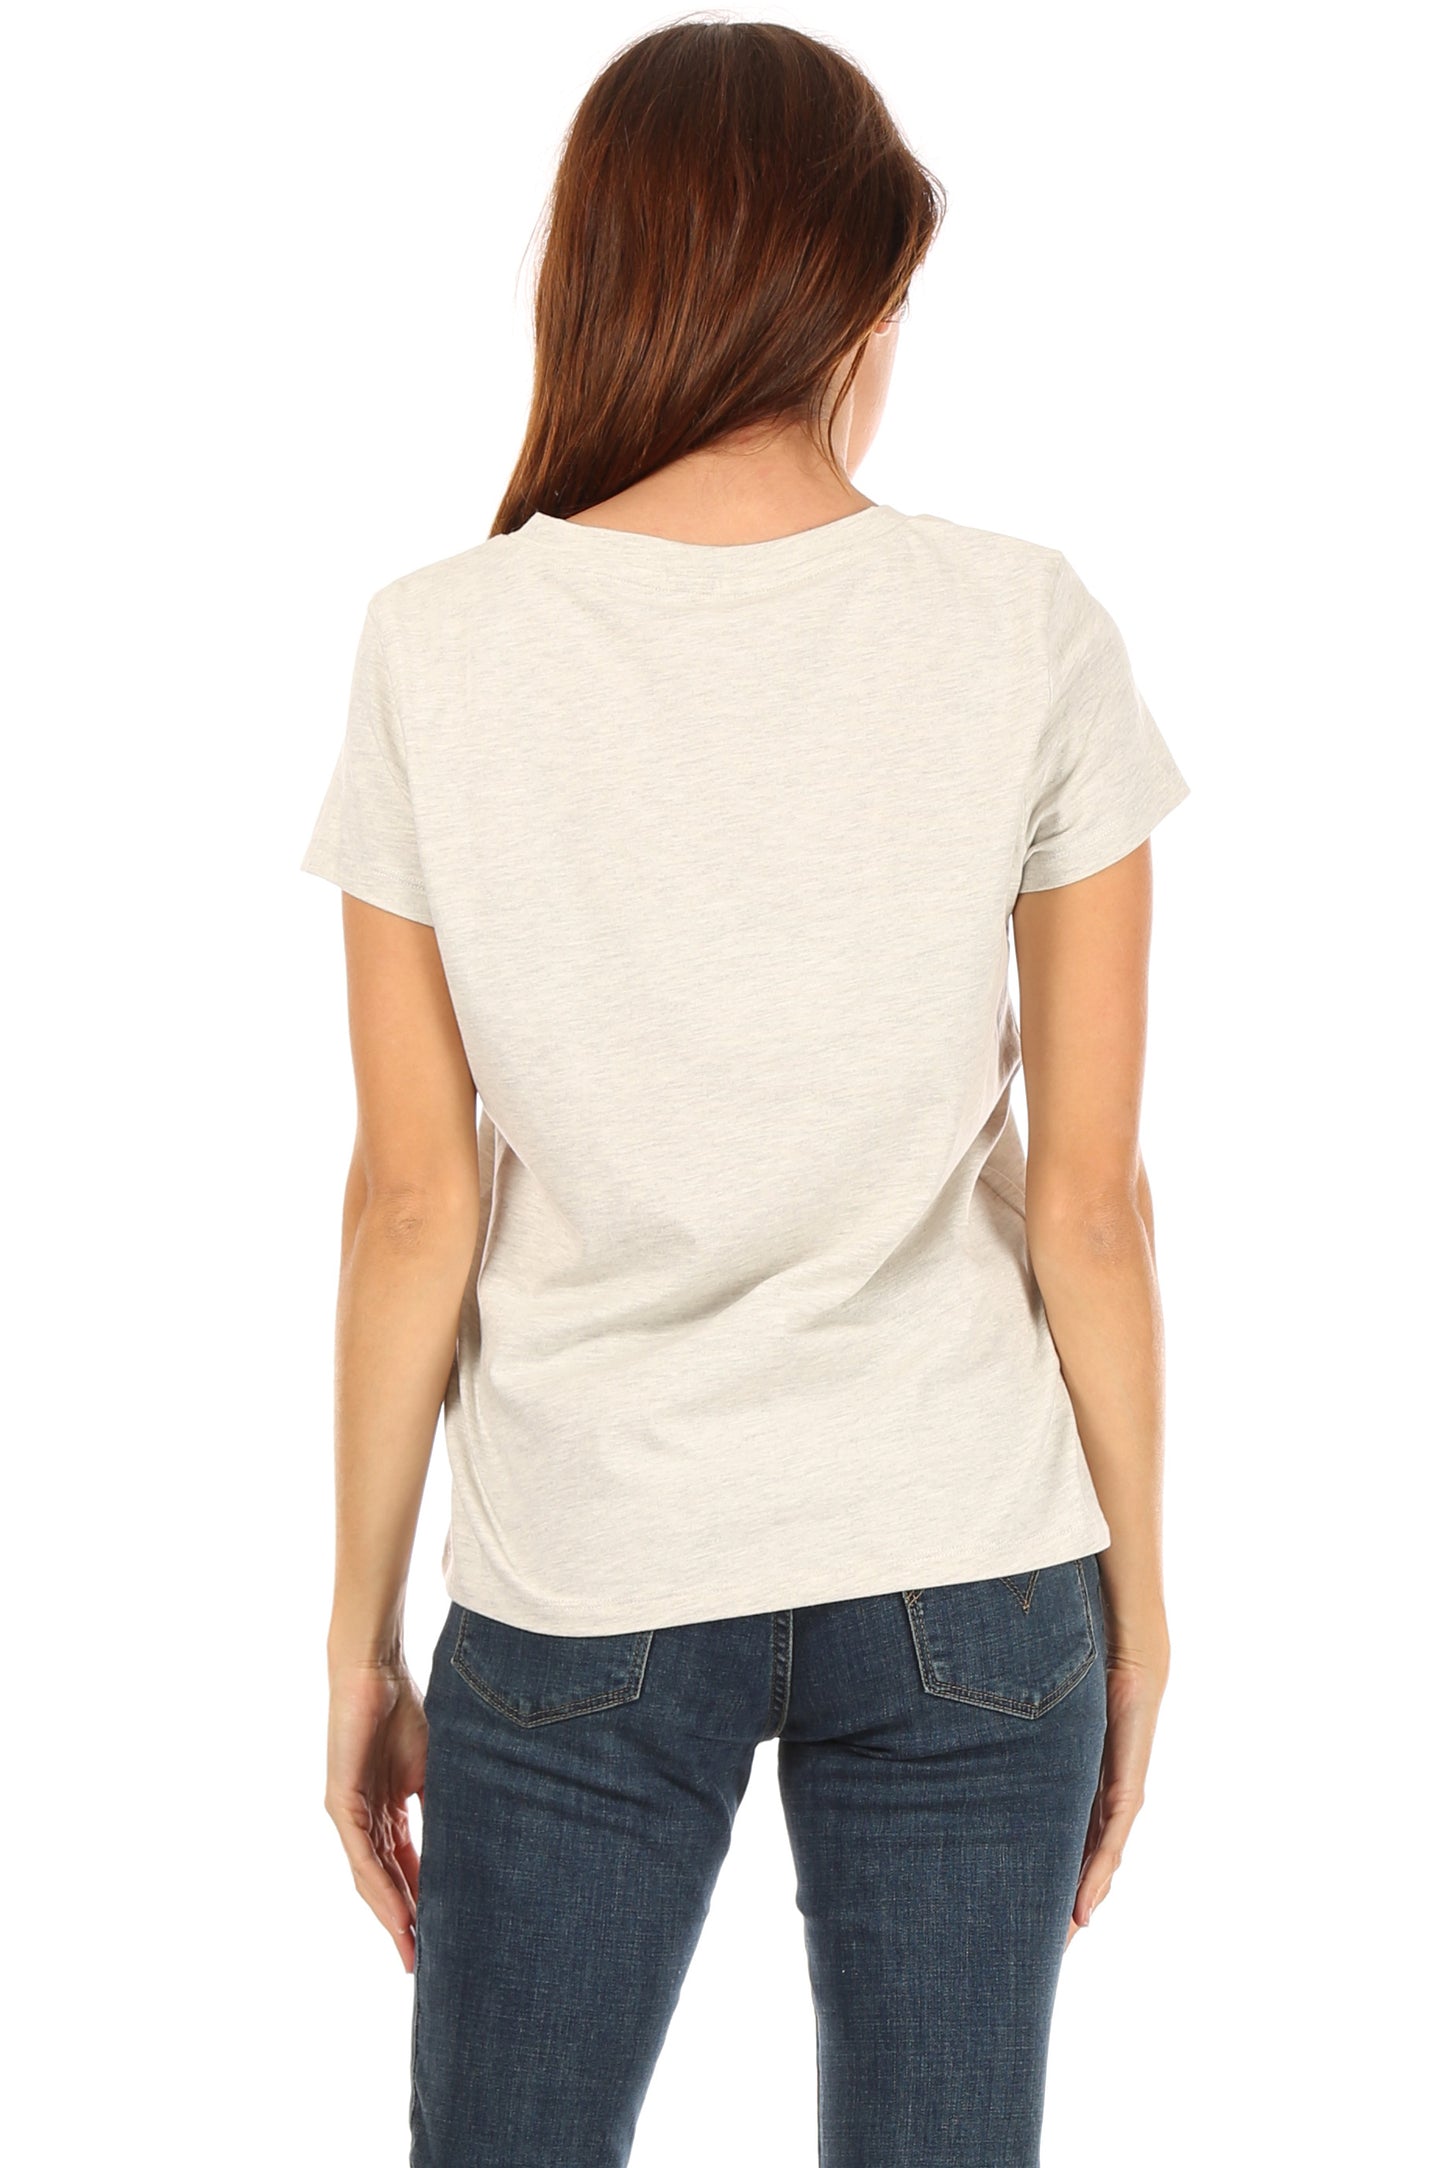 Women's "GOOD VIBES" Short Sleeve Icon T-Shirt - Shop Rae Dunn Apparel and Sleepwear